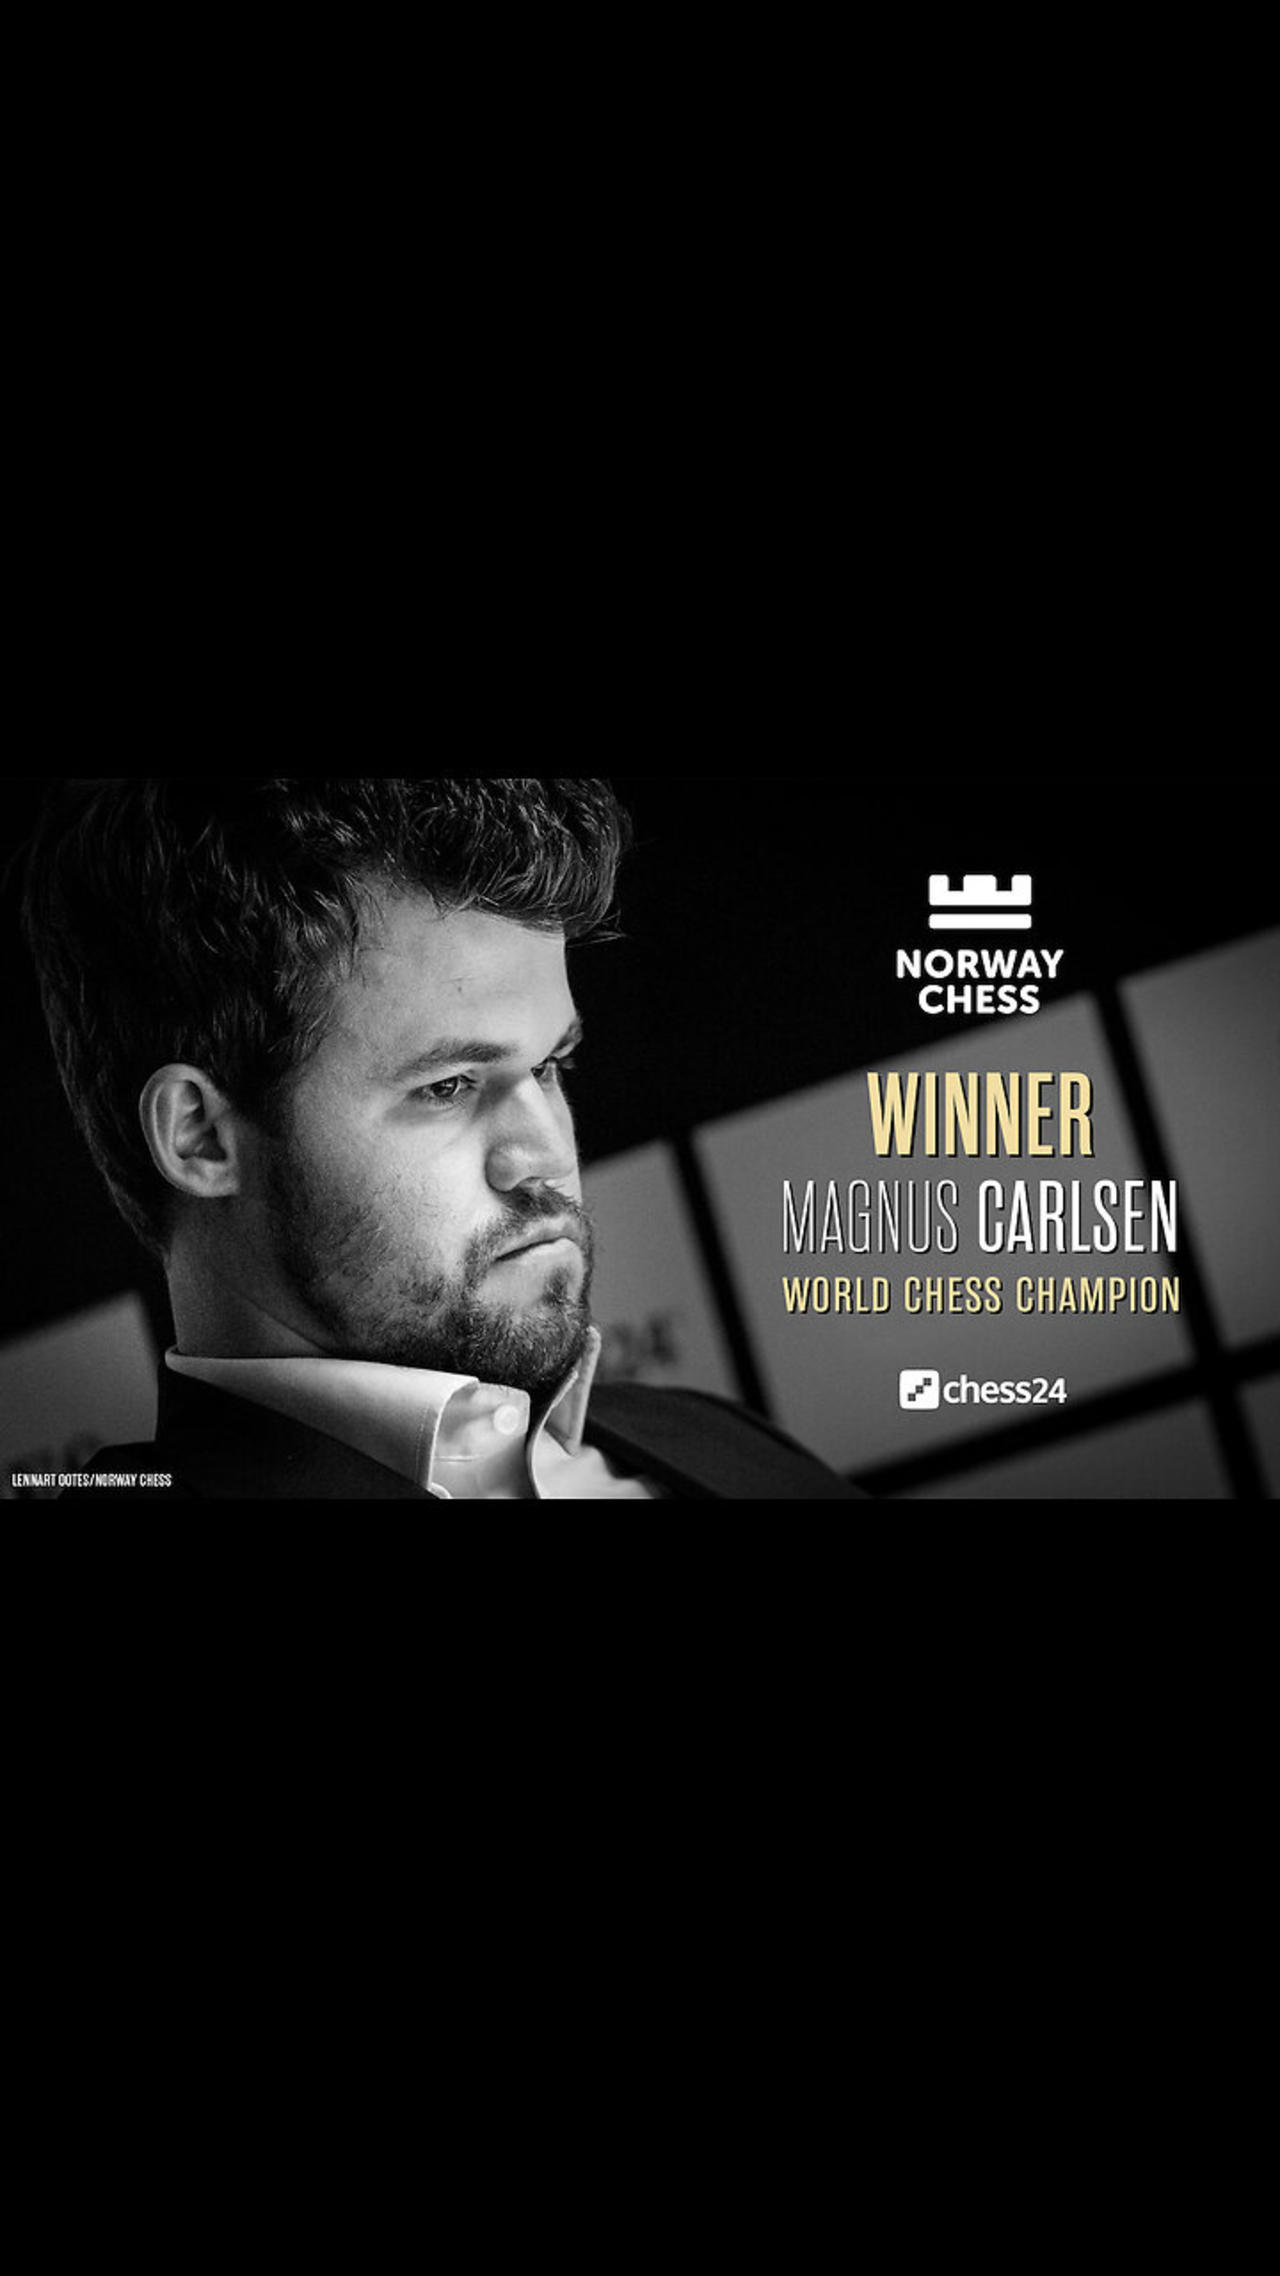 "How GOAT cooks the world" 👑 Magnus Carlsen edit #MagnusCarlsen #chess #pawnstarss